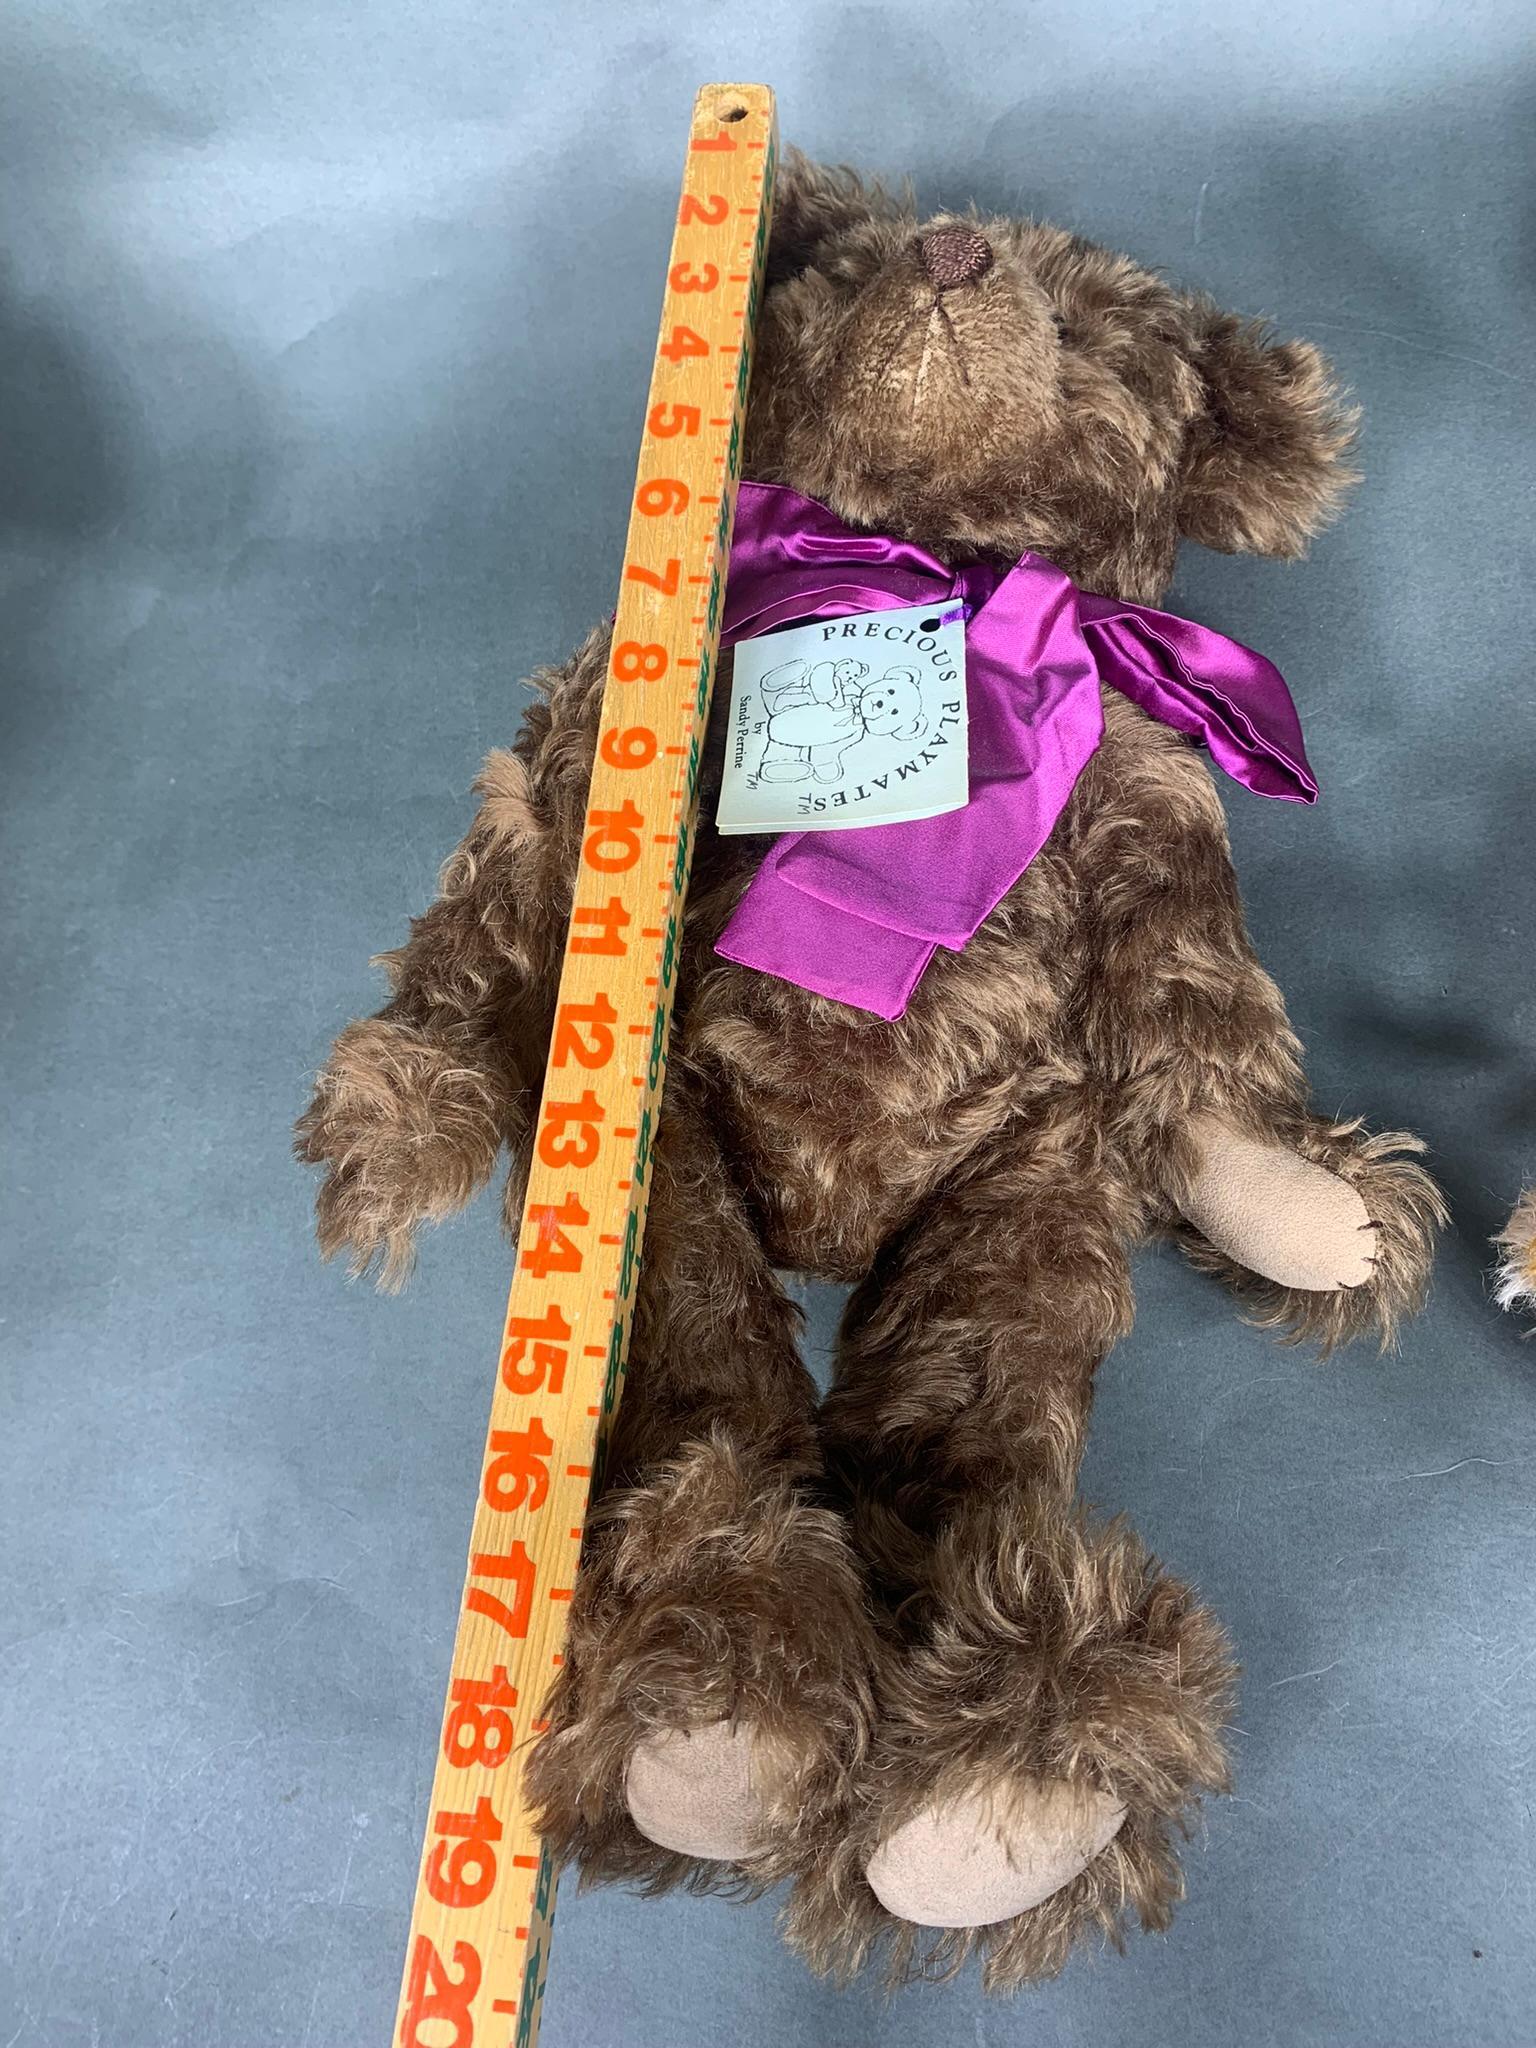 2 Vintage Stuffed Teddy Bears - Precious Playmates by Sandy Perrine & Bears Sew Special By Martha